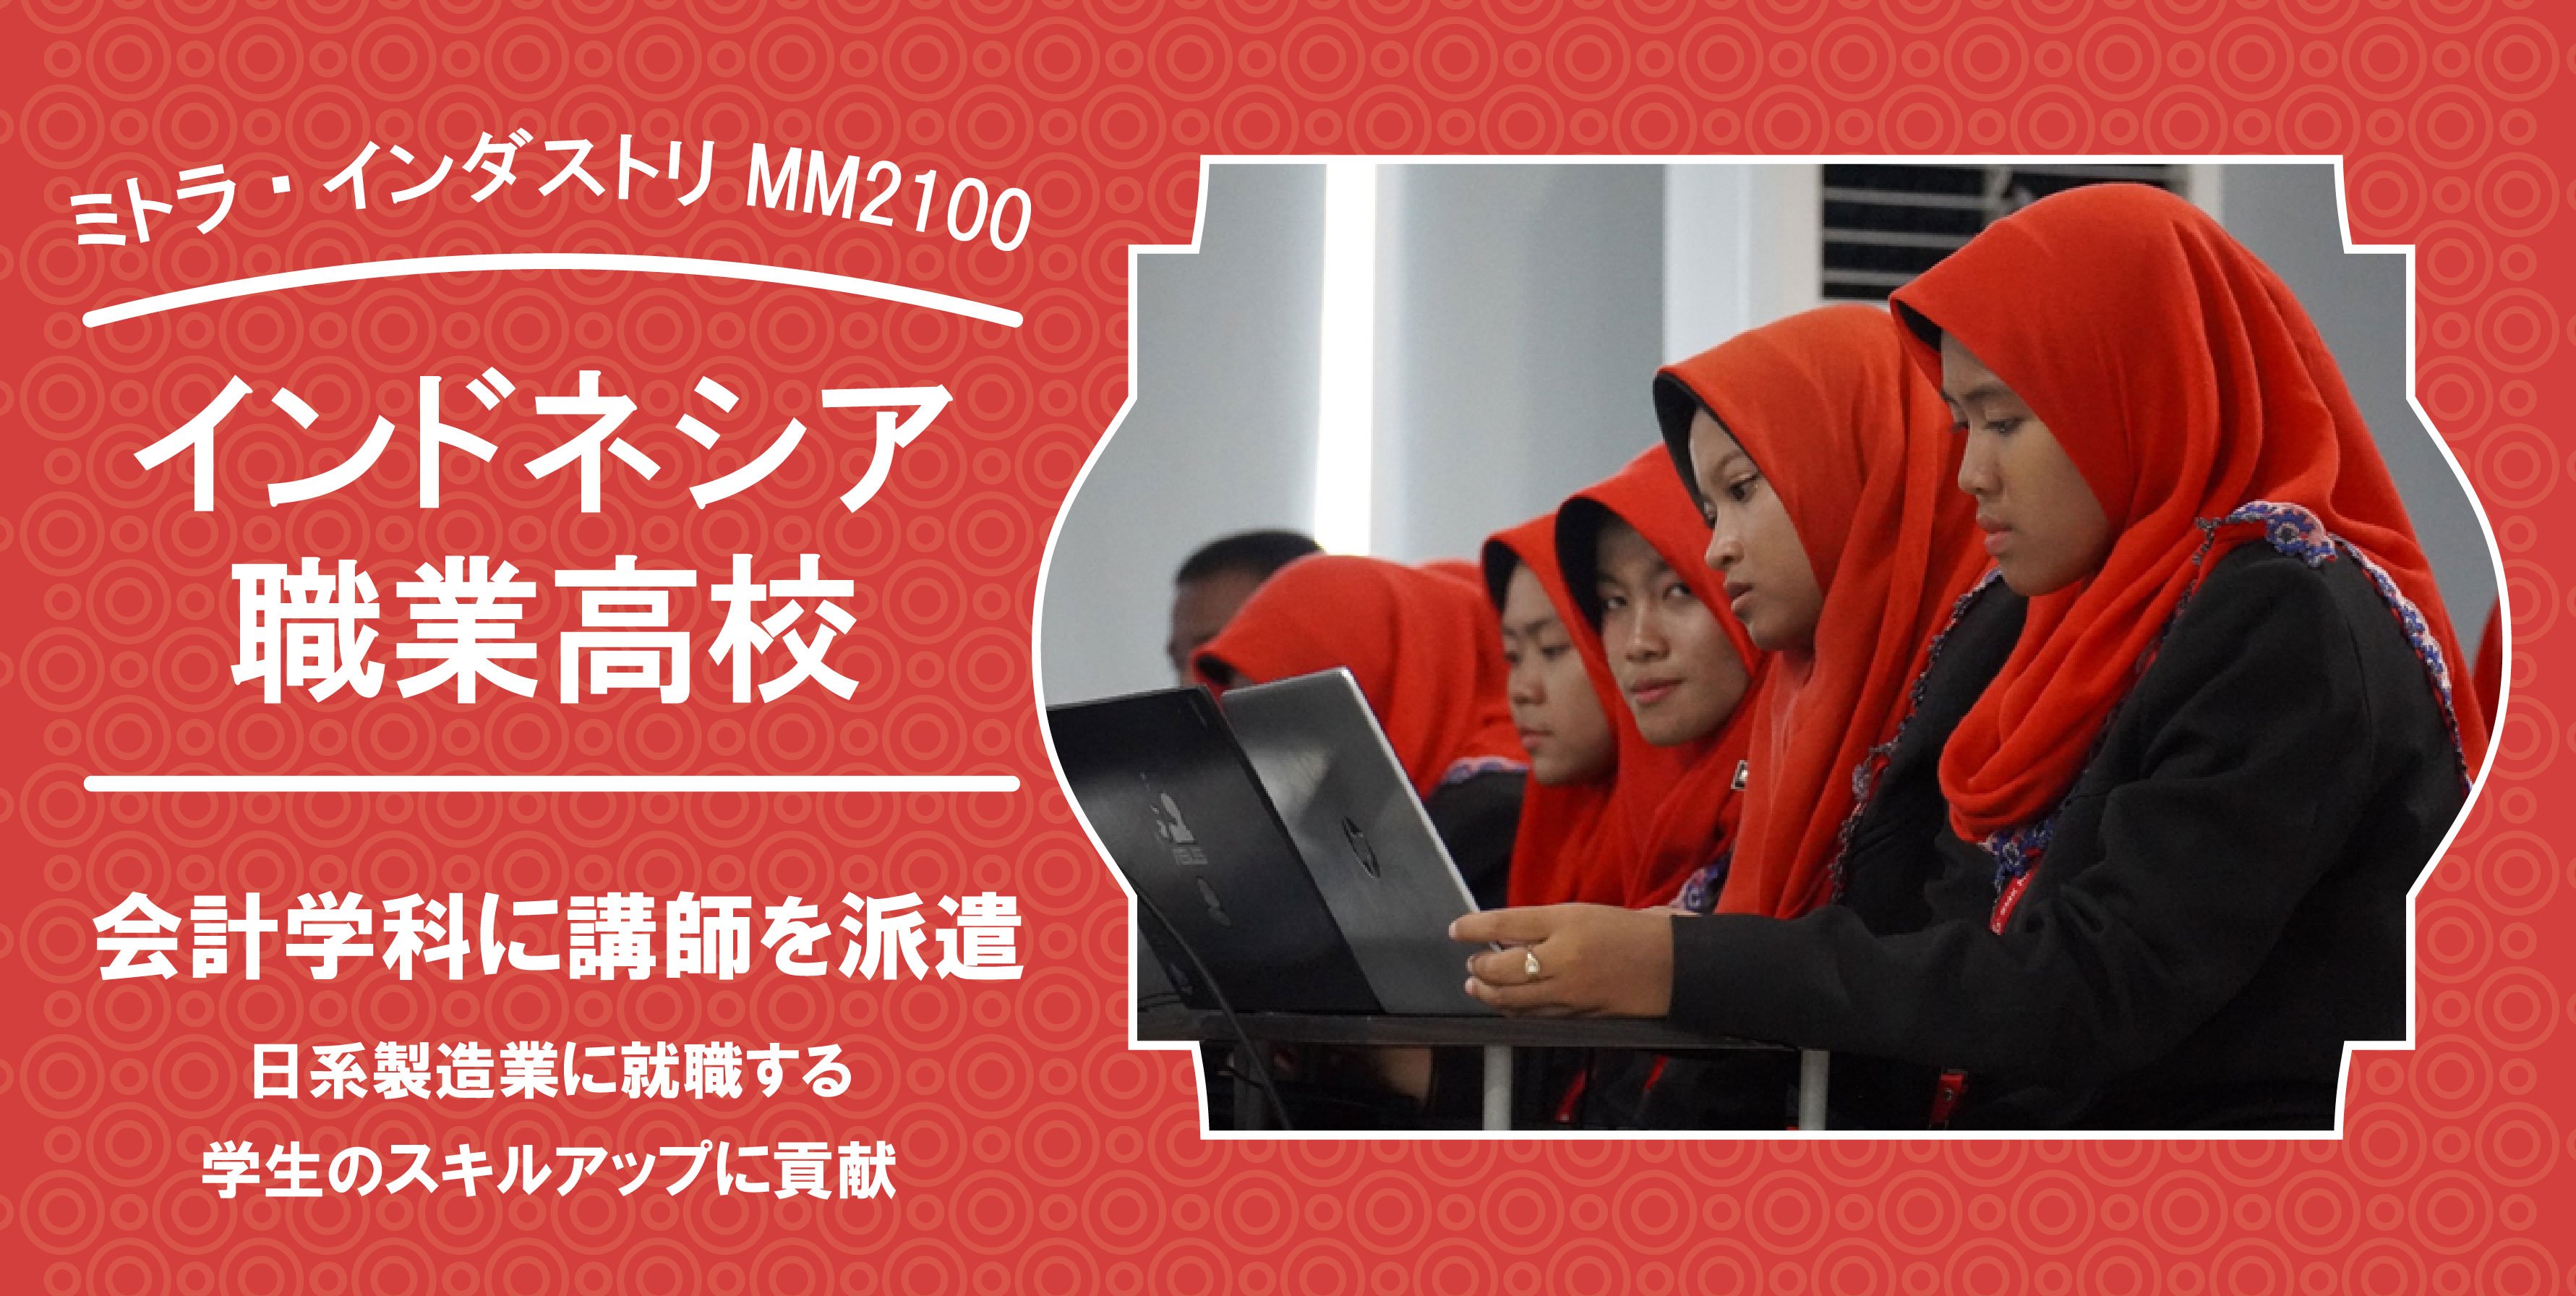 B-EN-Gが、インドネシア職業高校「ミトラ・インダストリMM2100」の会計学科に講師を派遣 日系製造業に就職する生徒のスキルアップに貢献